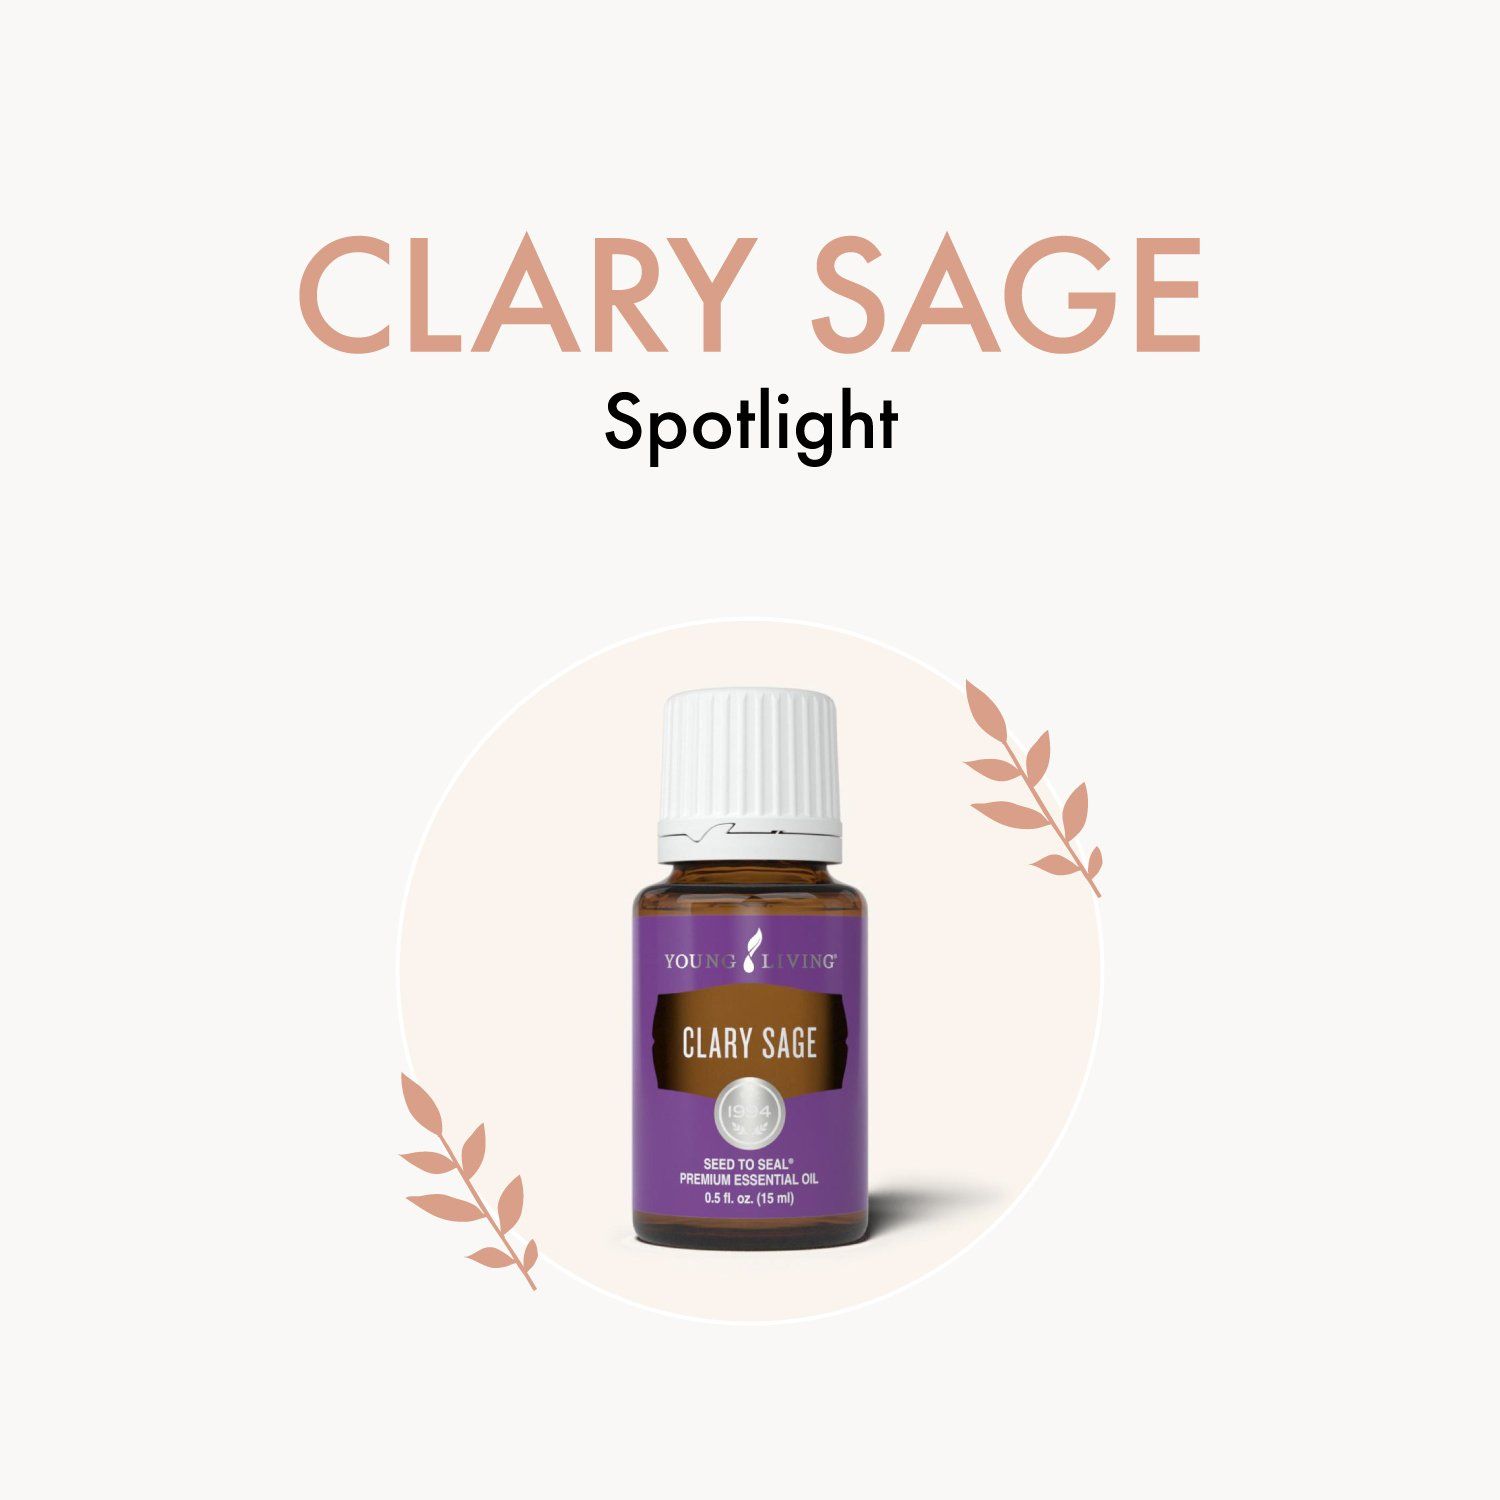 Clary Sage Spotlight